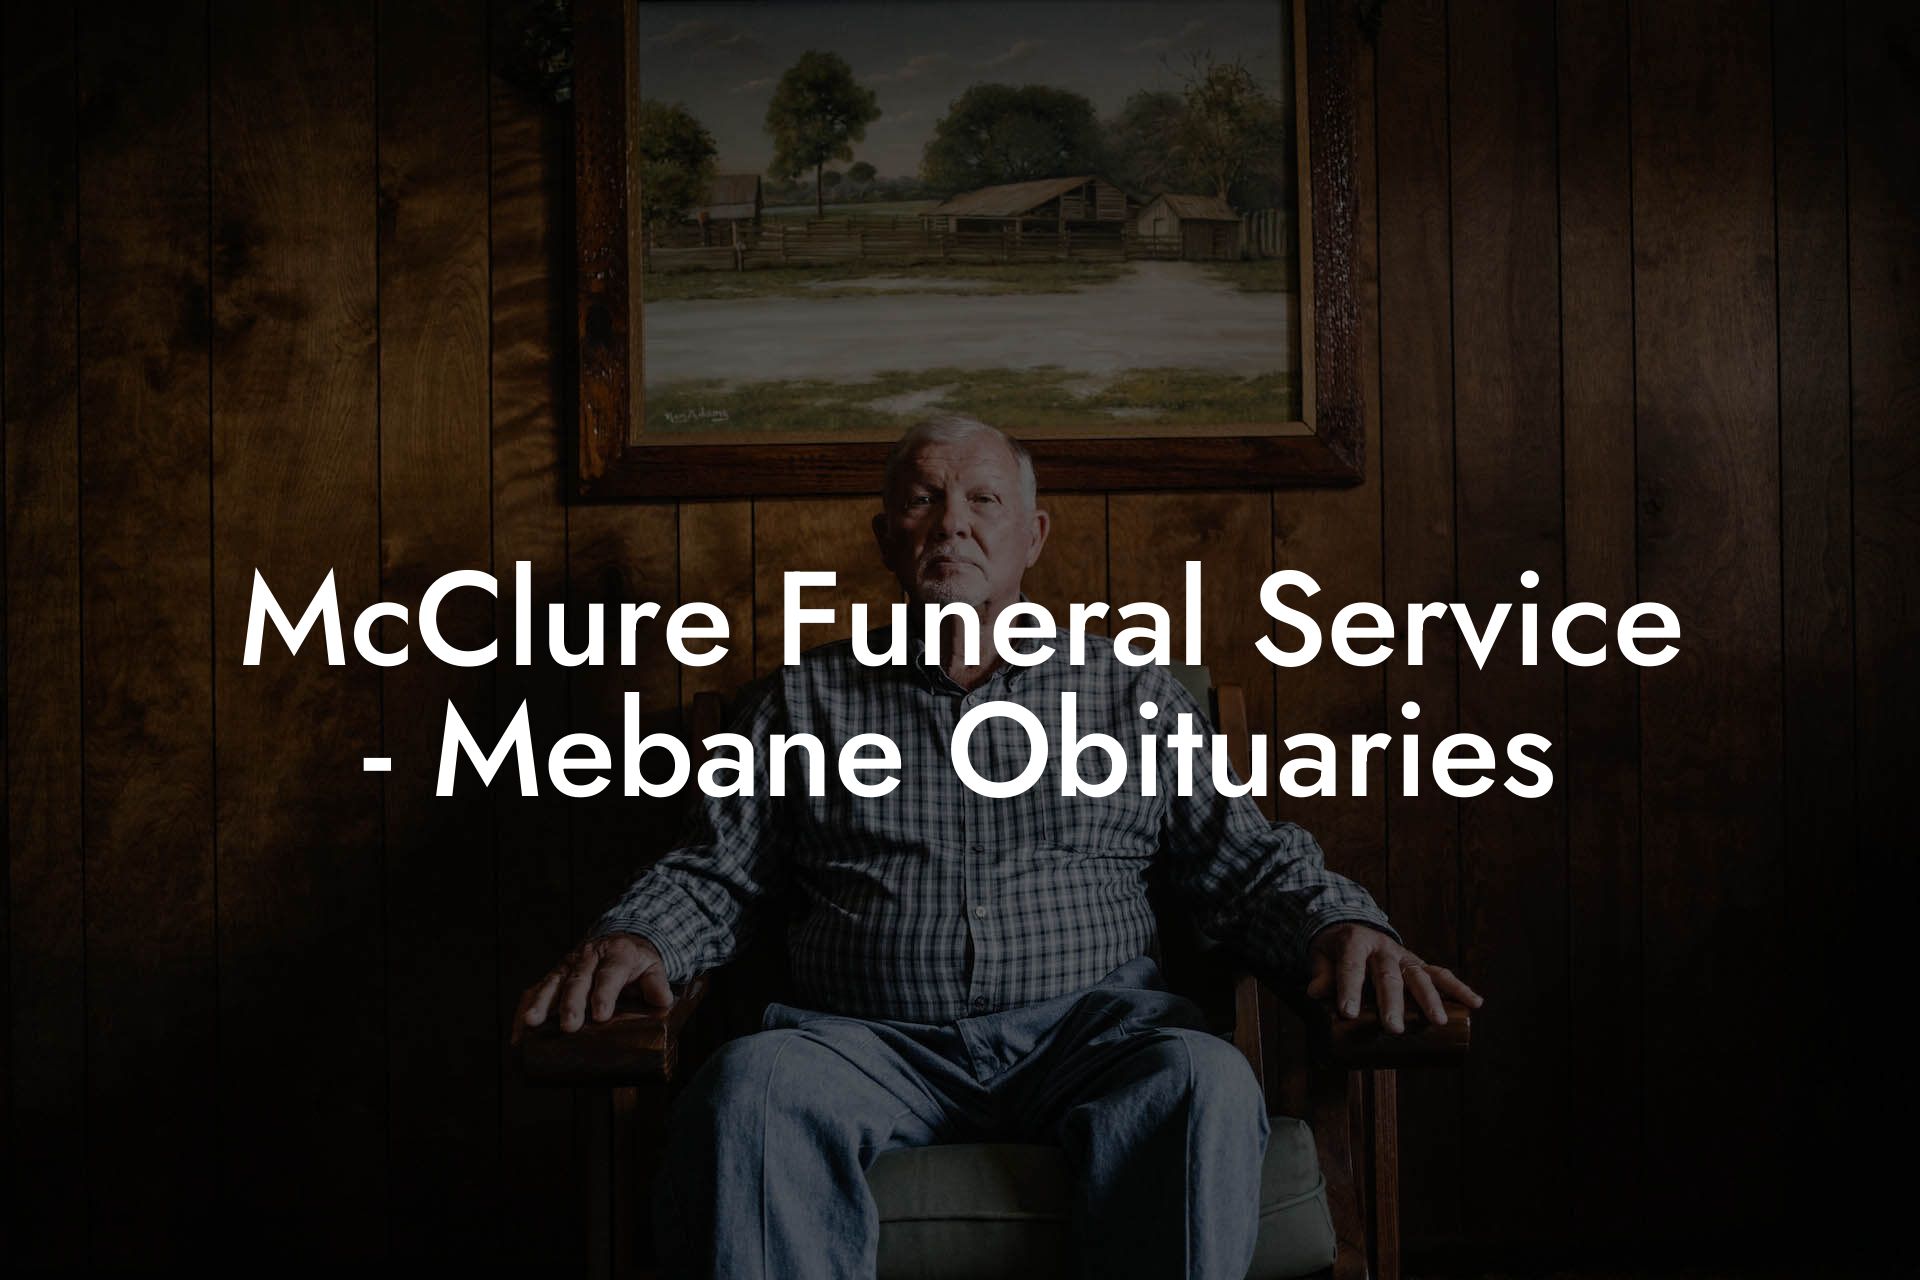 McClure Funeral Service - Mebane Obituaries